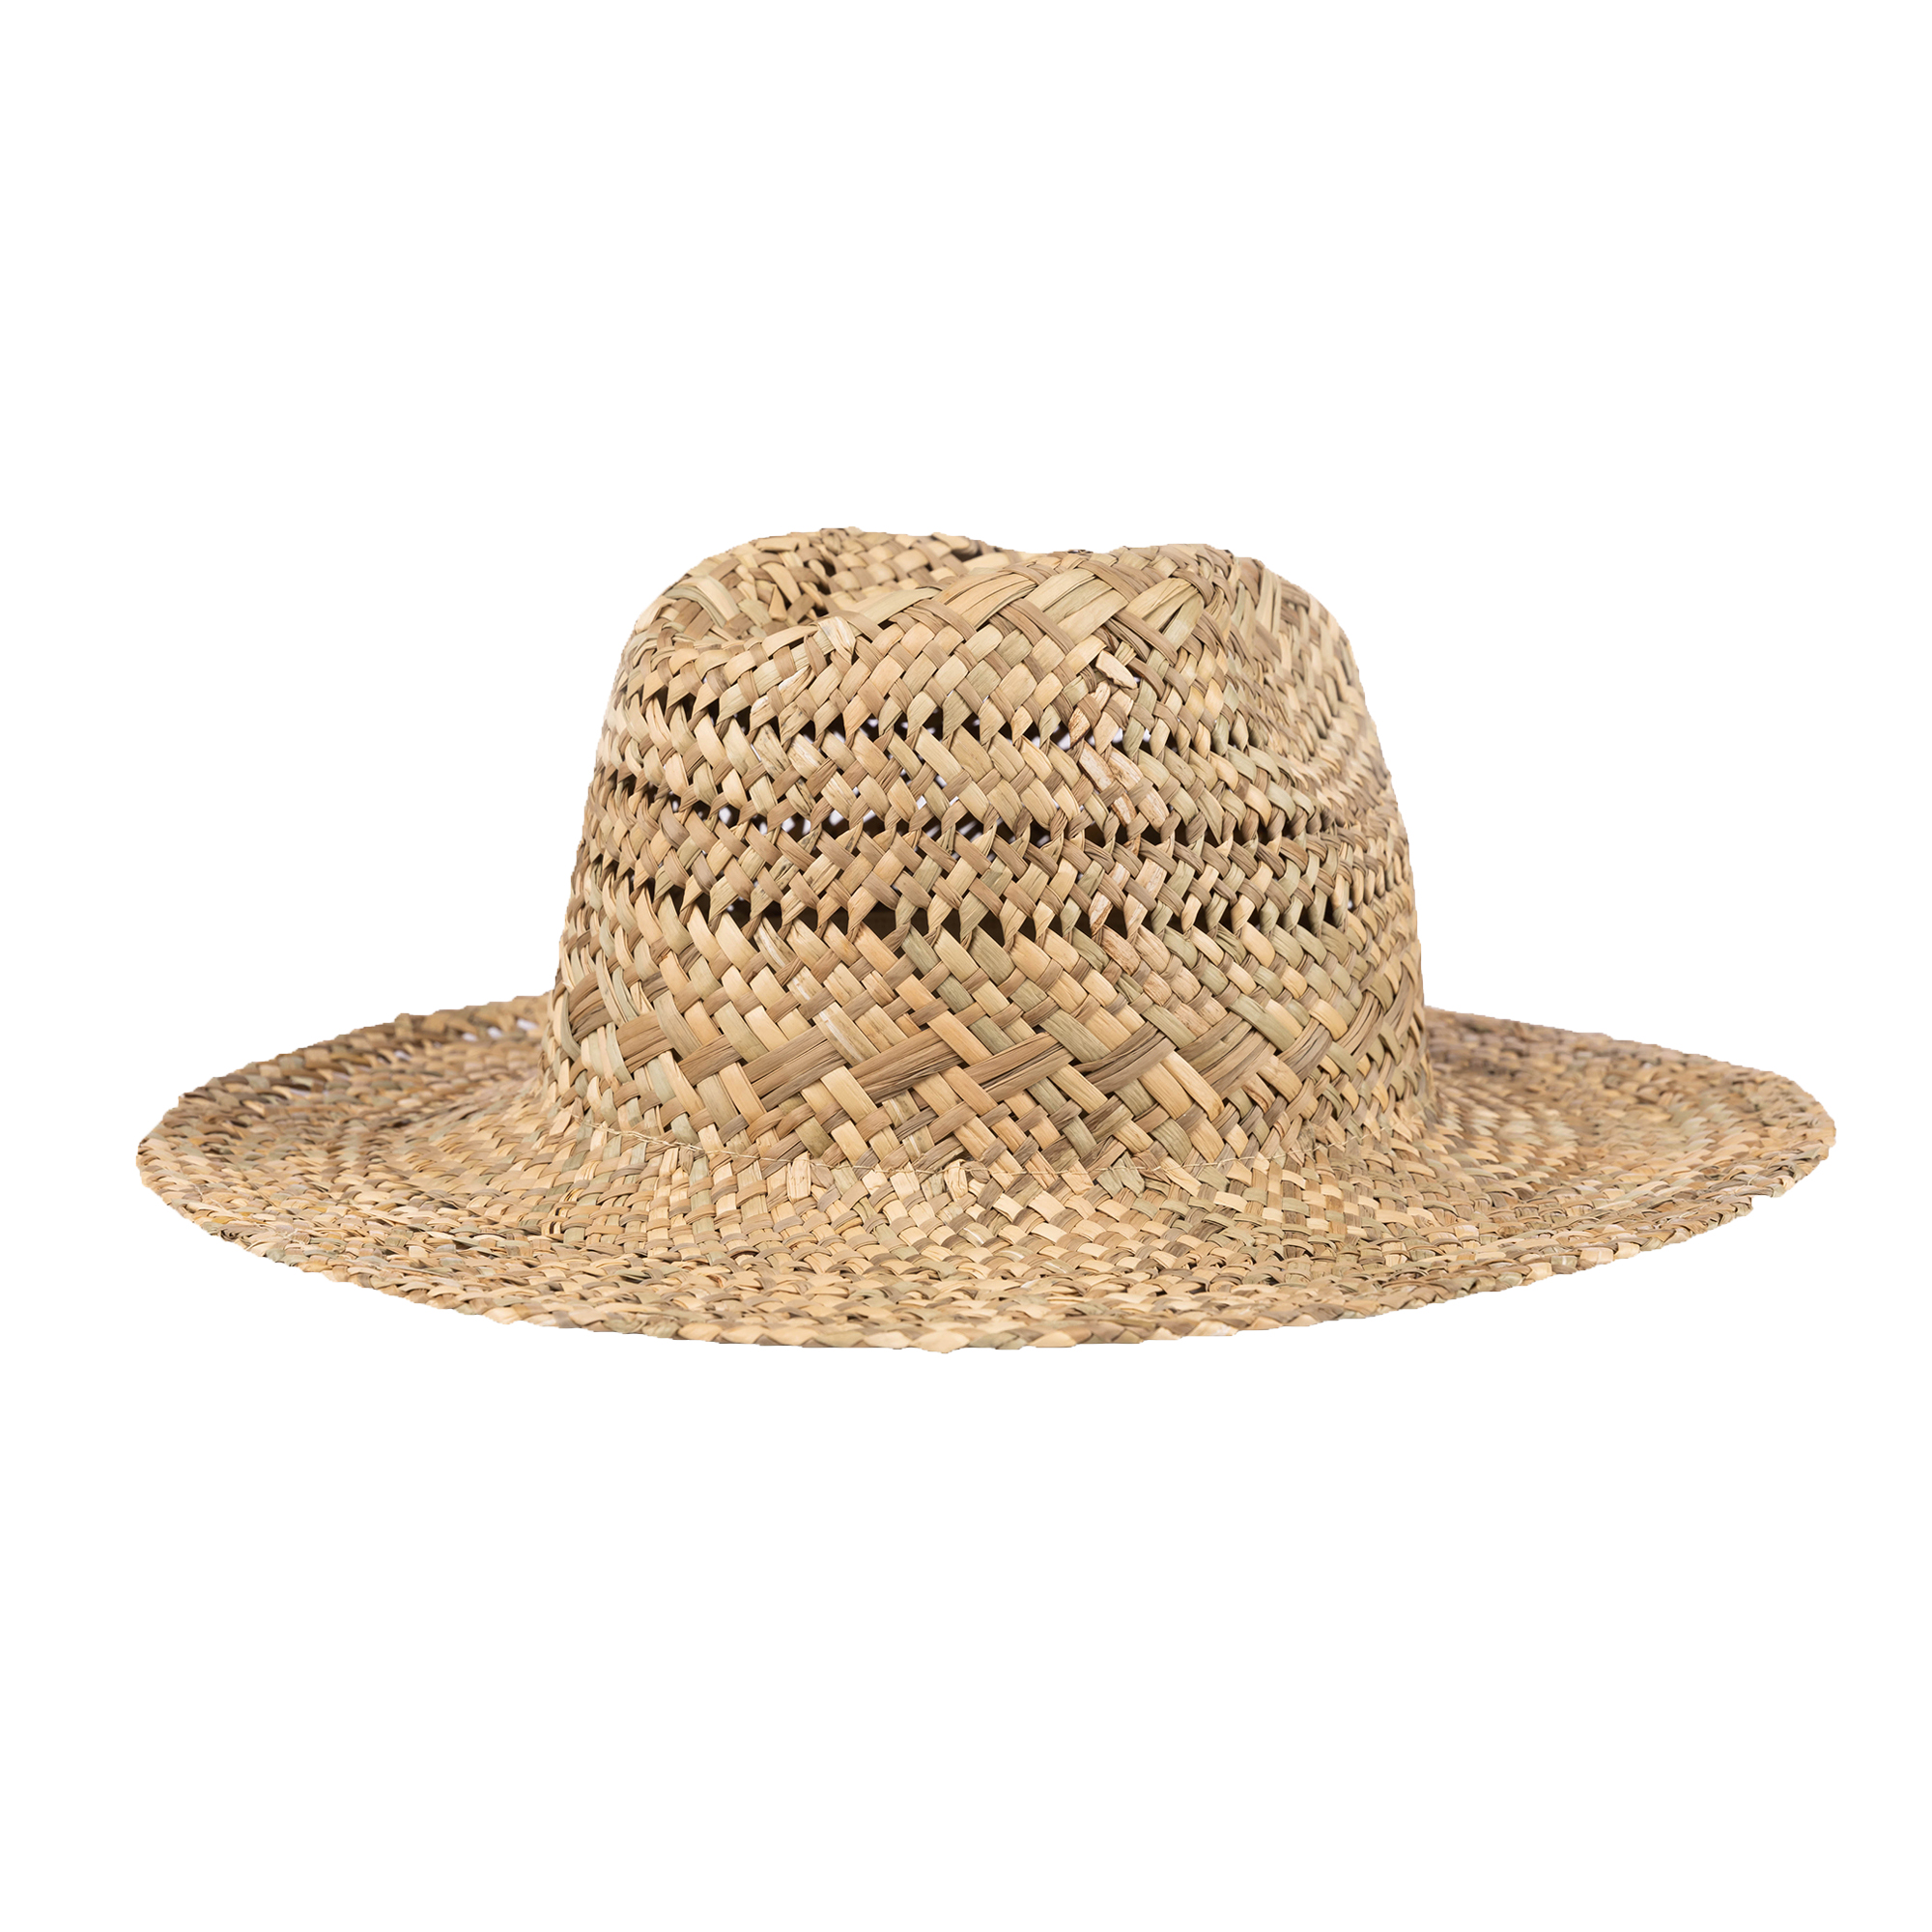 Rip Curl - Women's Straw Panama hat